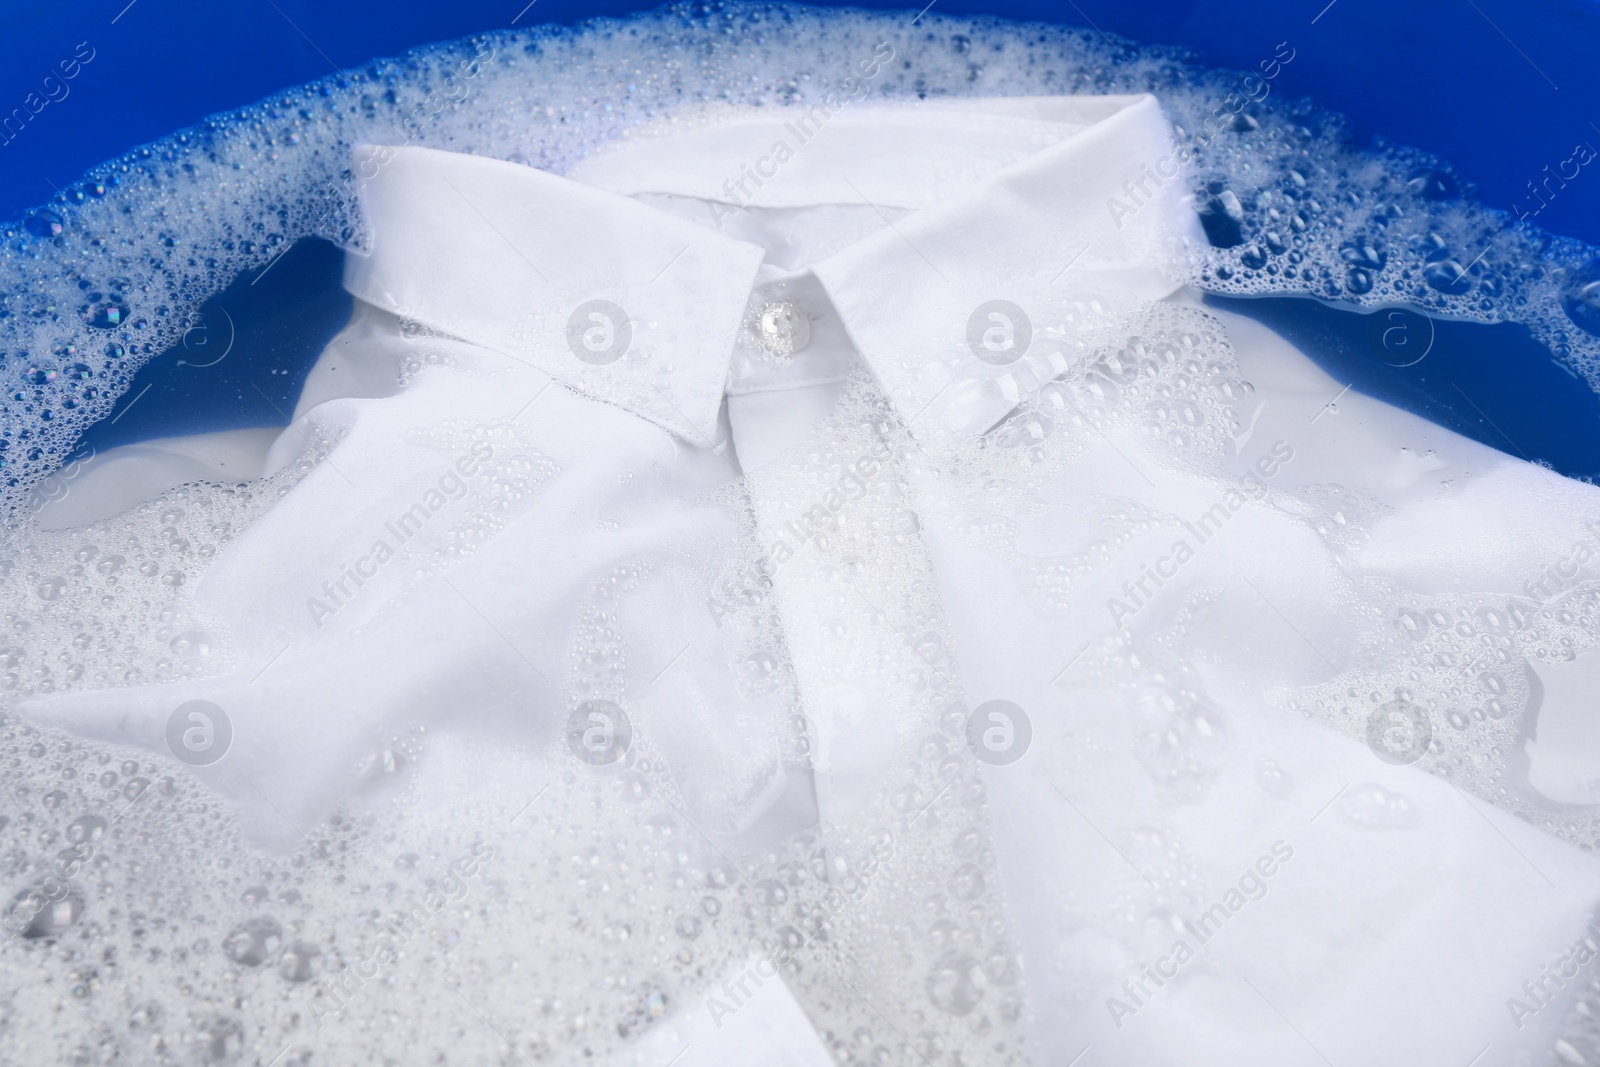 Photo of White shirt in suds, closeup. Hand washing laundry